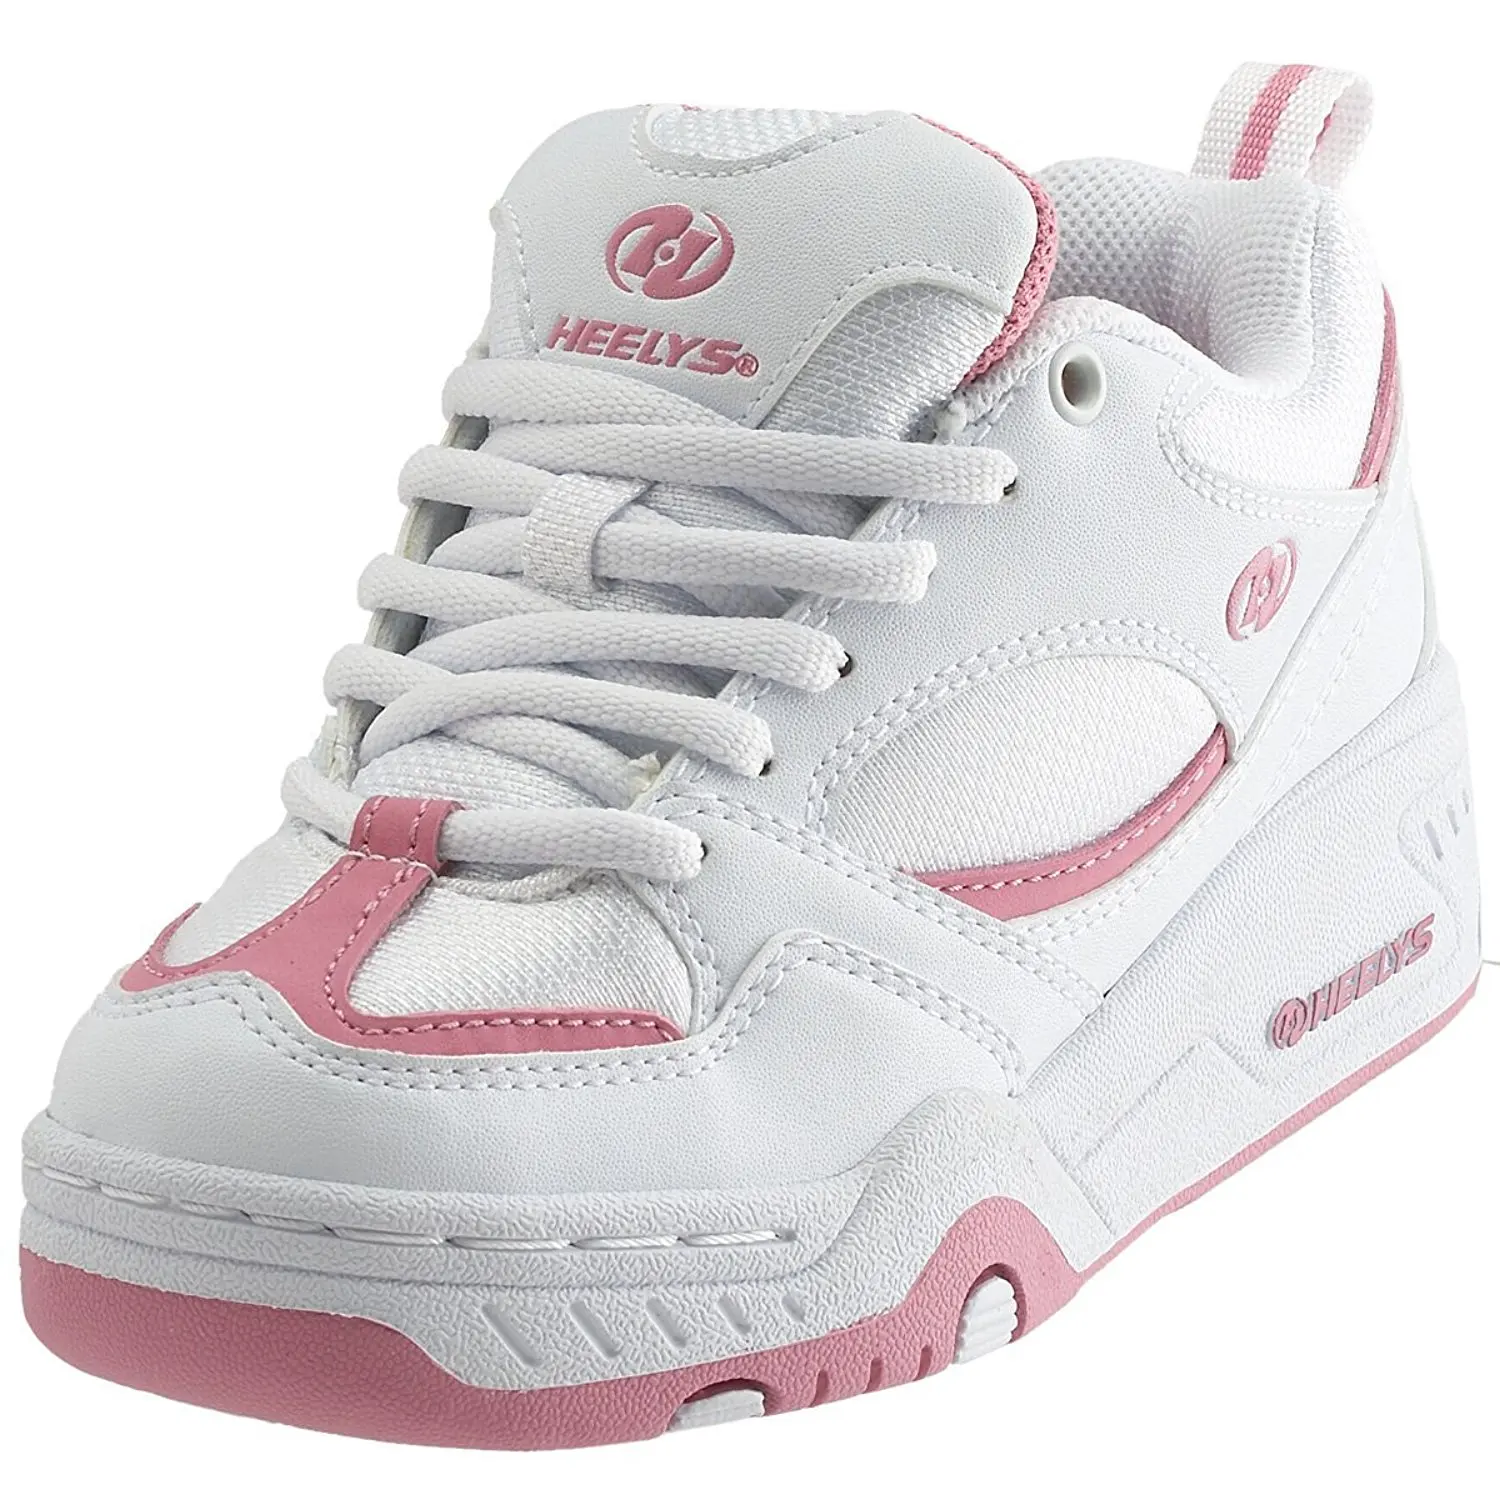 white and pink heelys